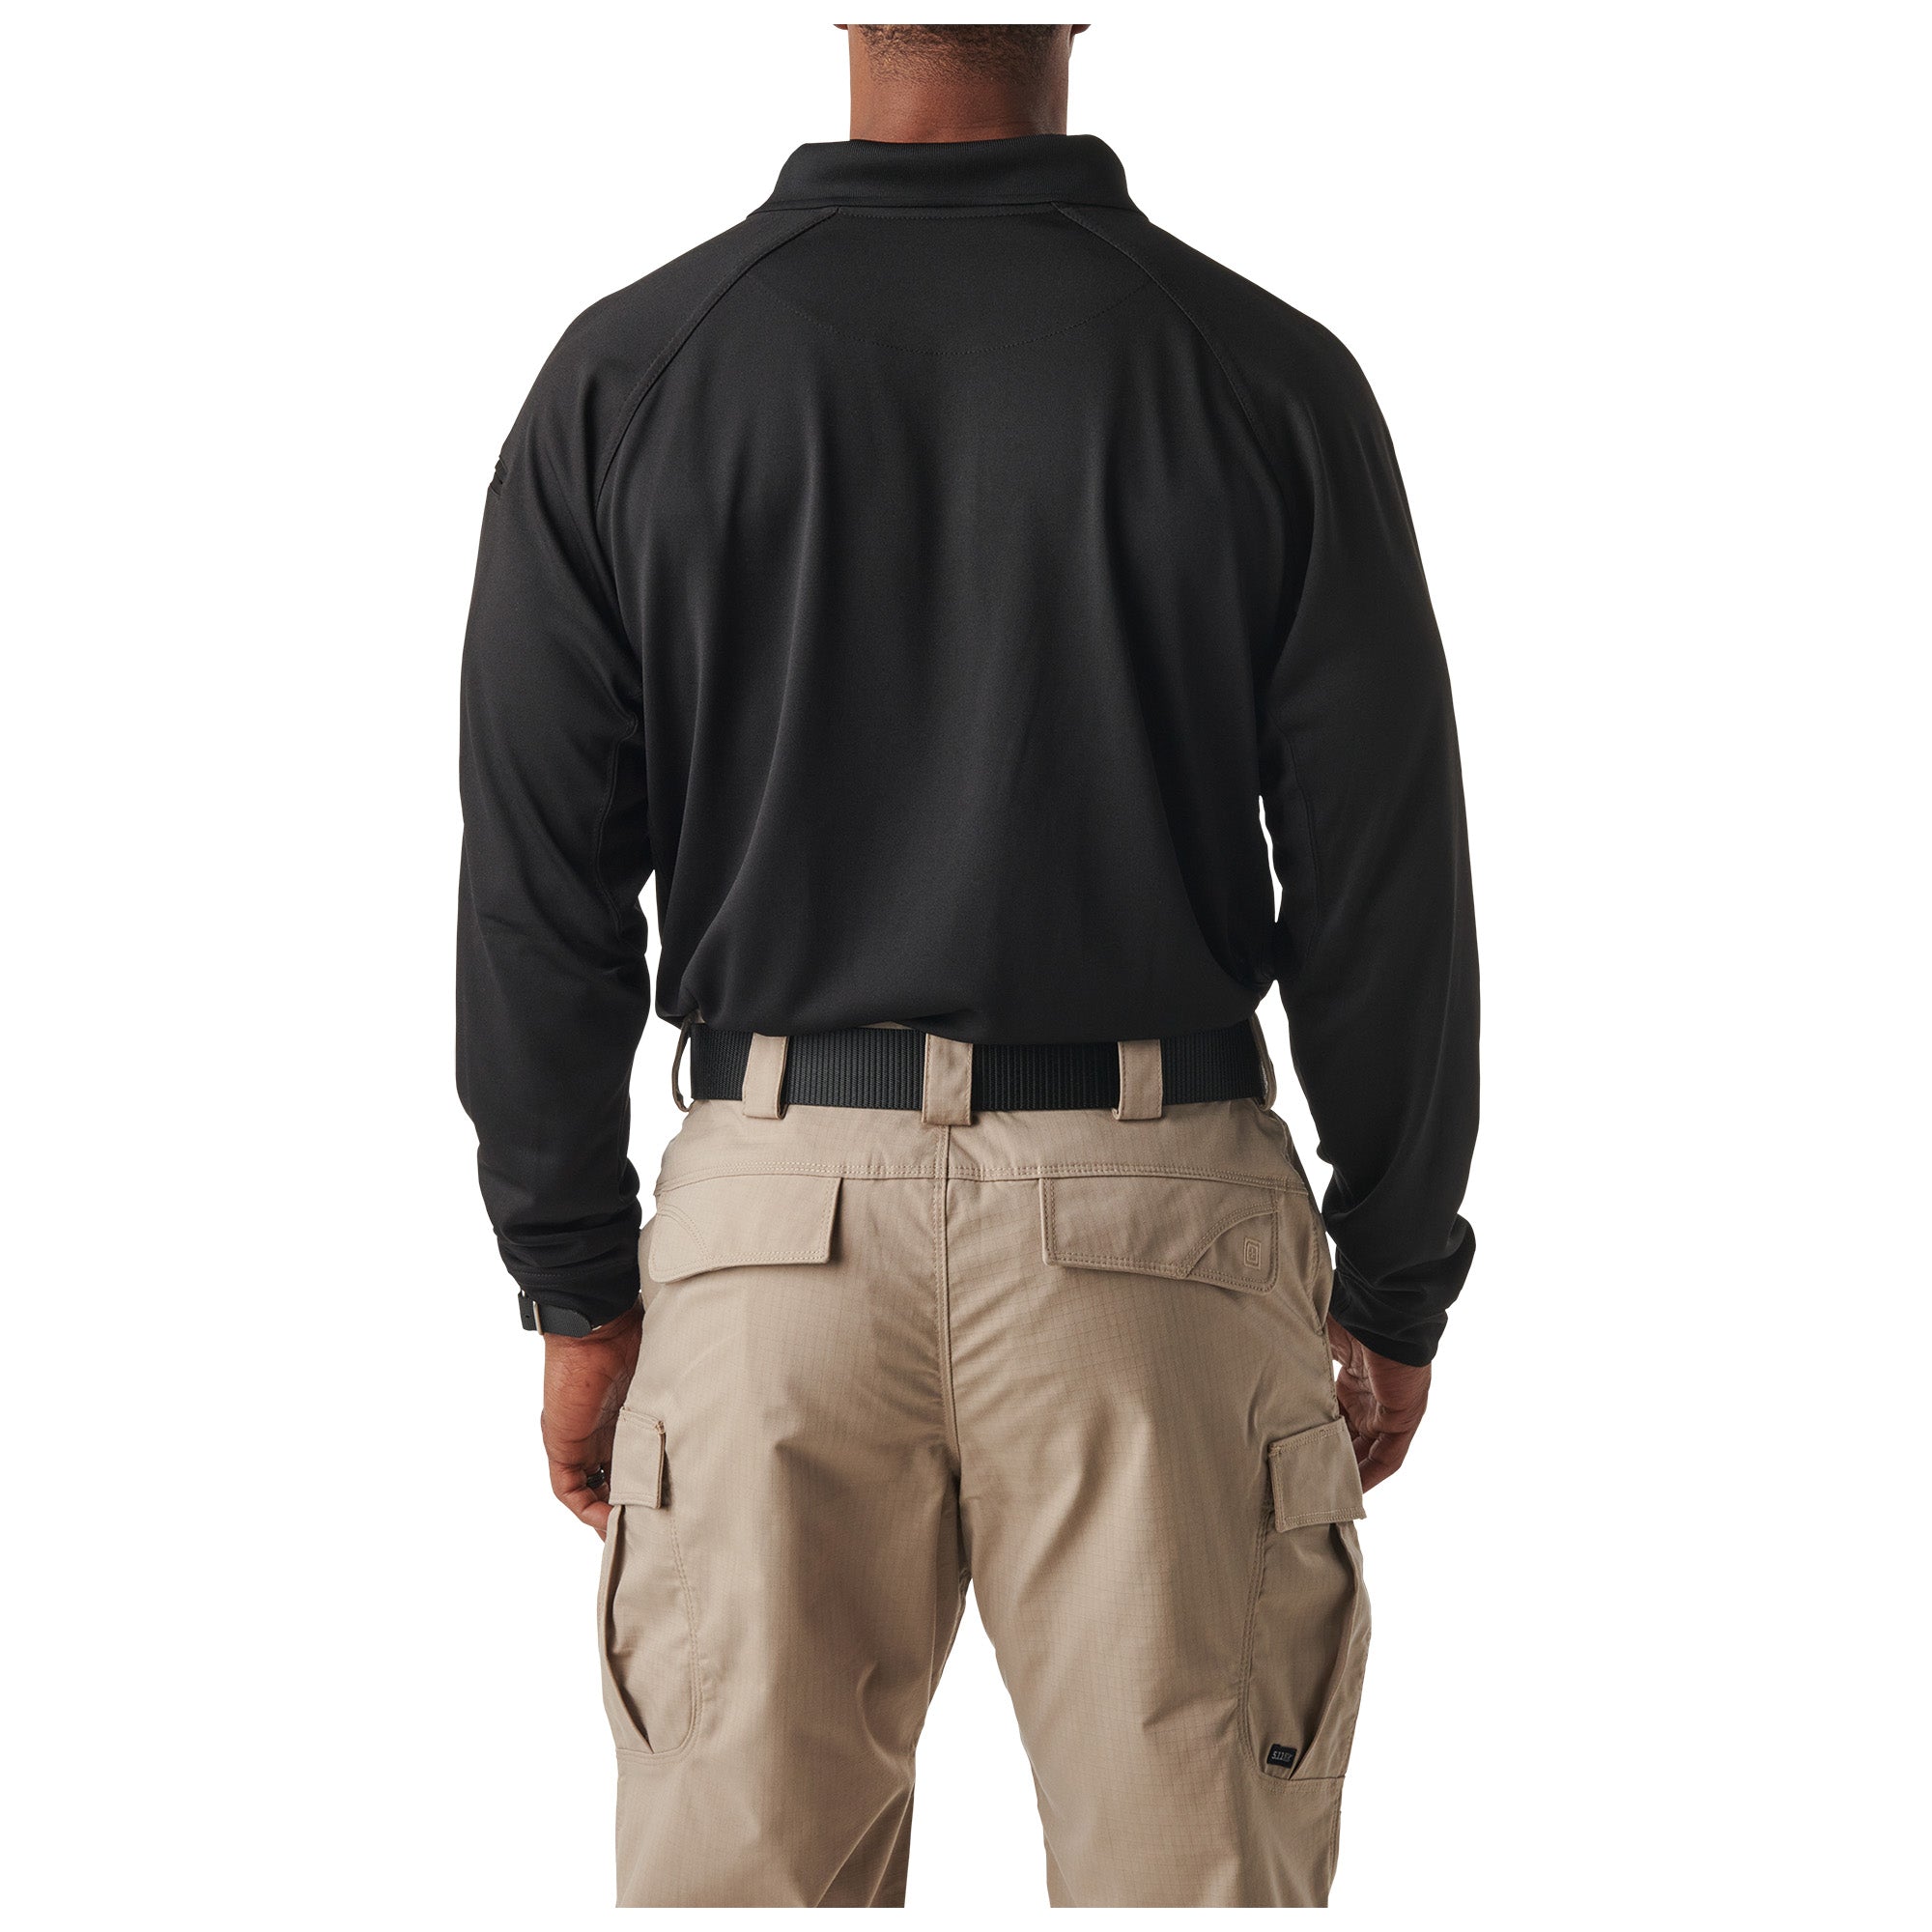 5.11 Tactical Performance Long Sleeve Polo Black Shirts 5.11 Tactical Tactical Gear Supplier Tactical Distributors Australia